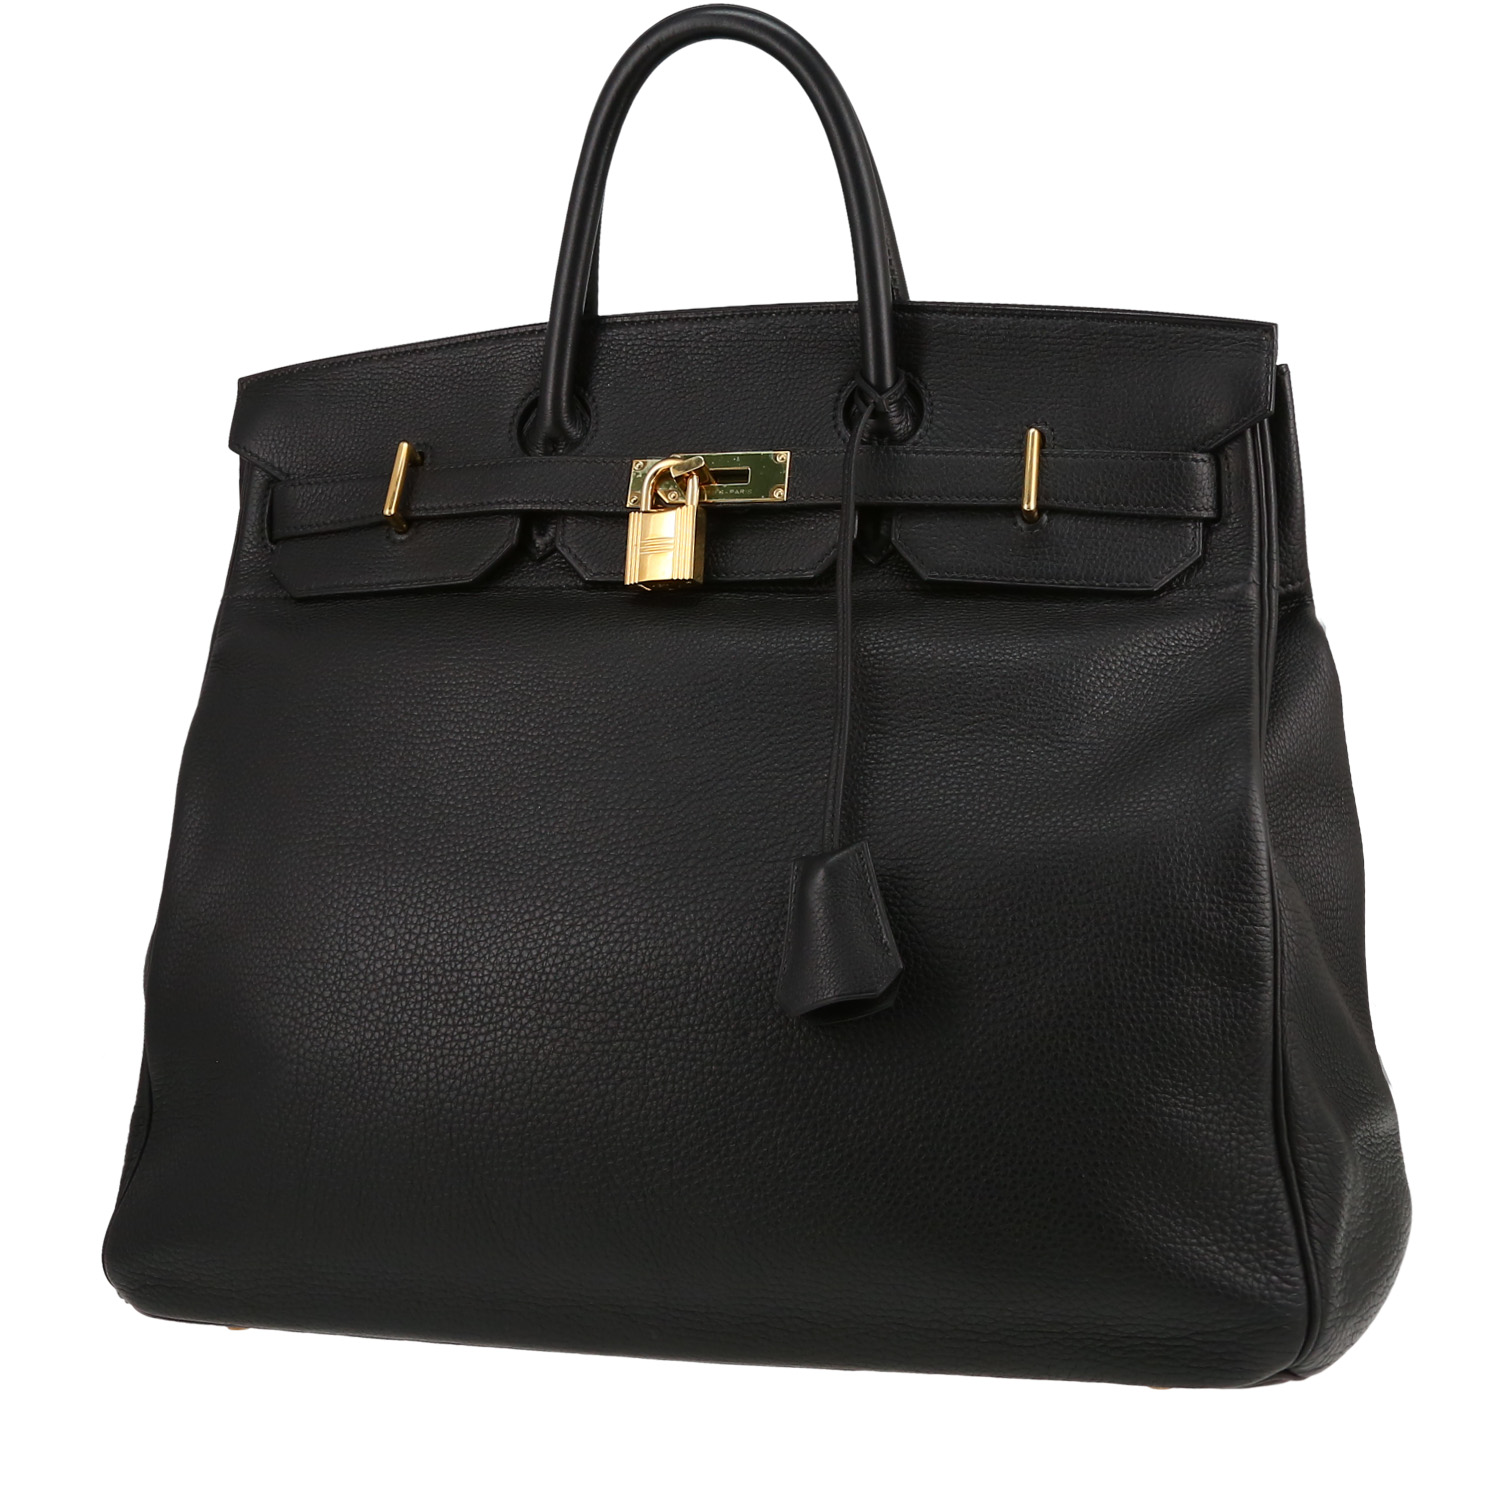 Hermès Haut à Courroies weekend bag in black togo leather